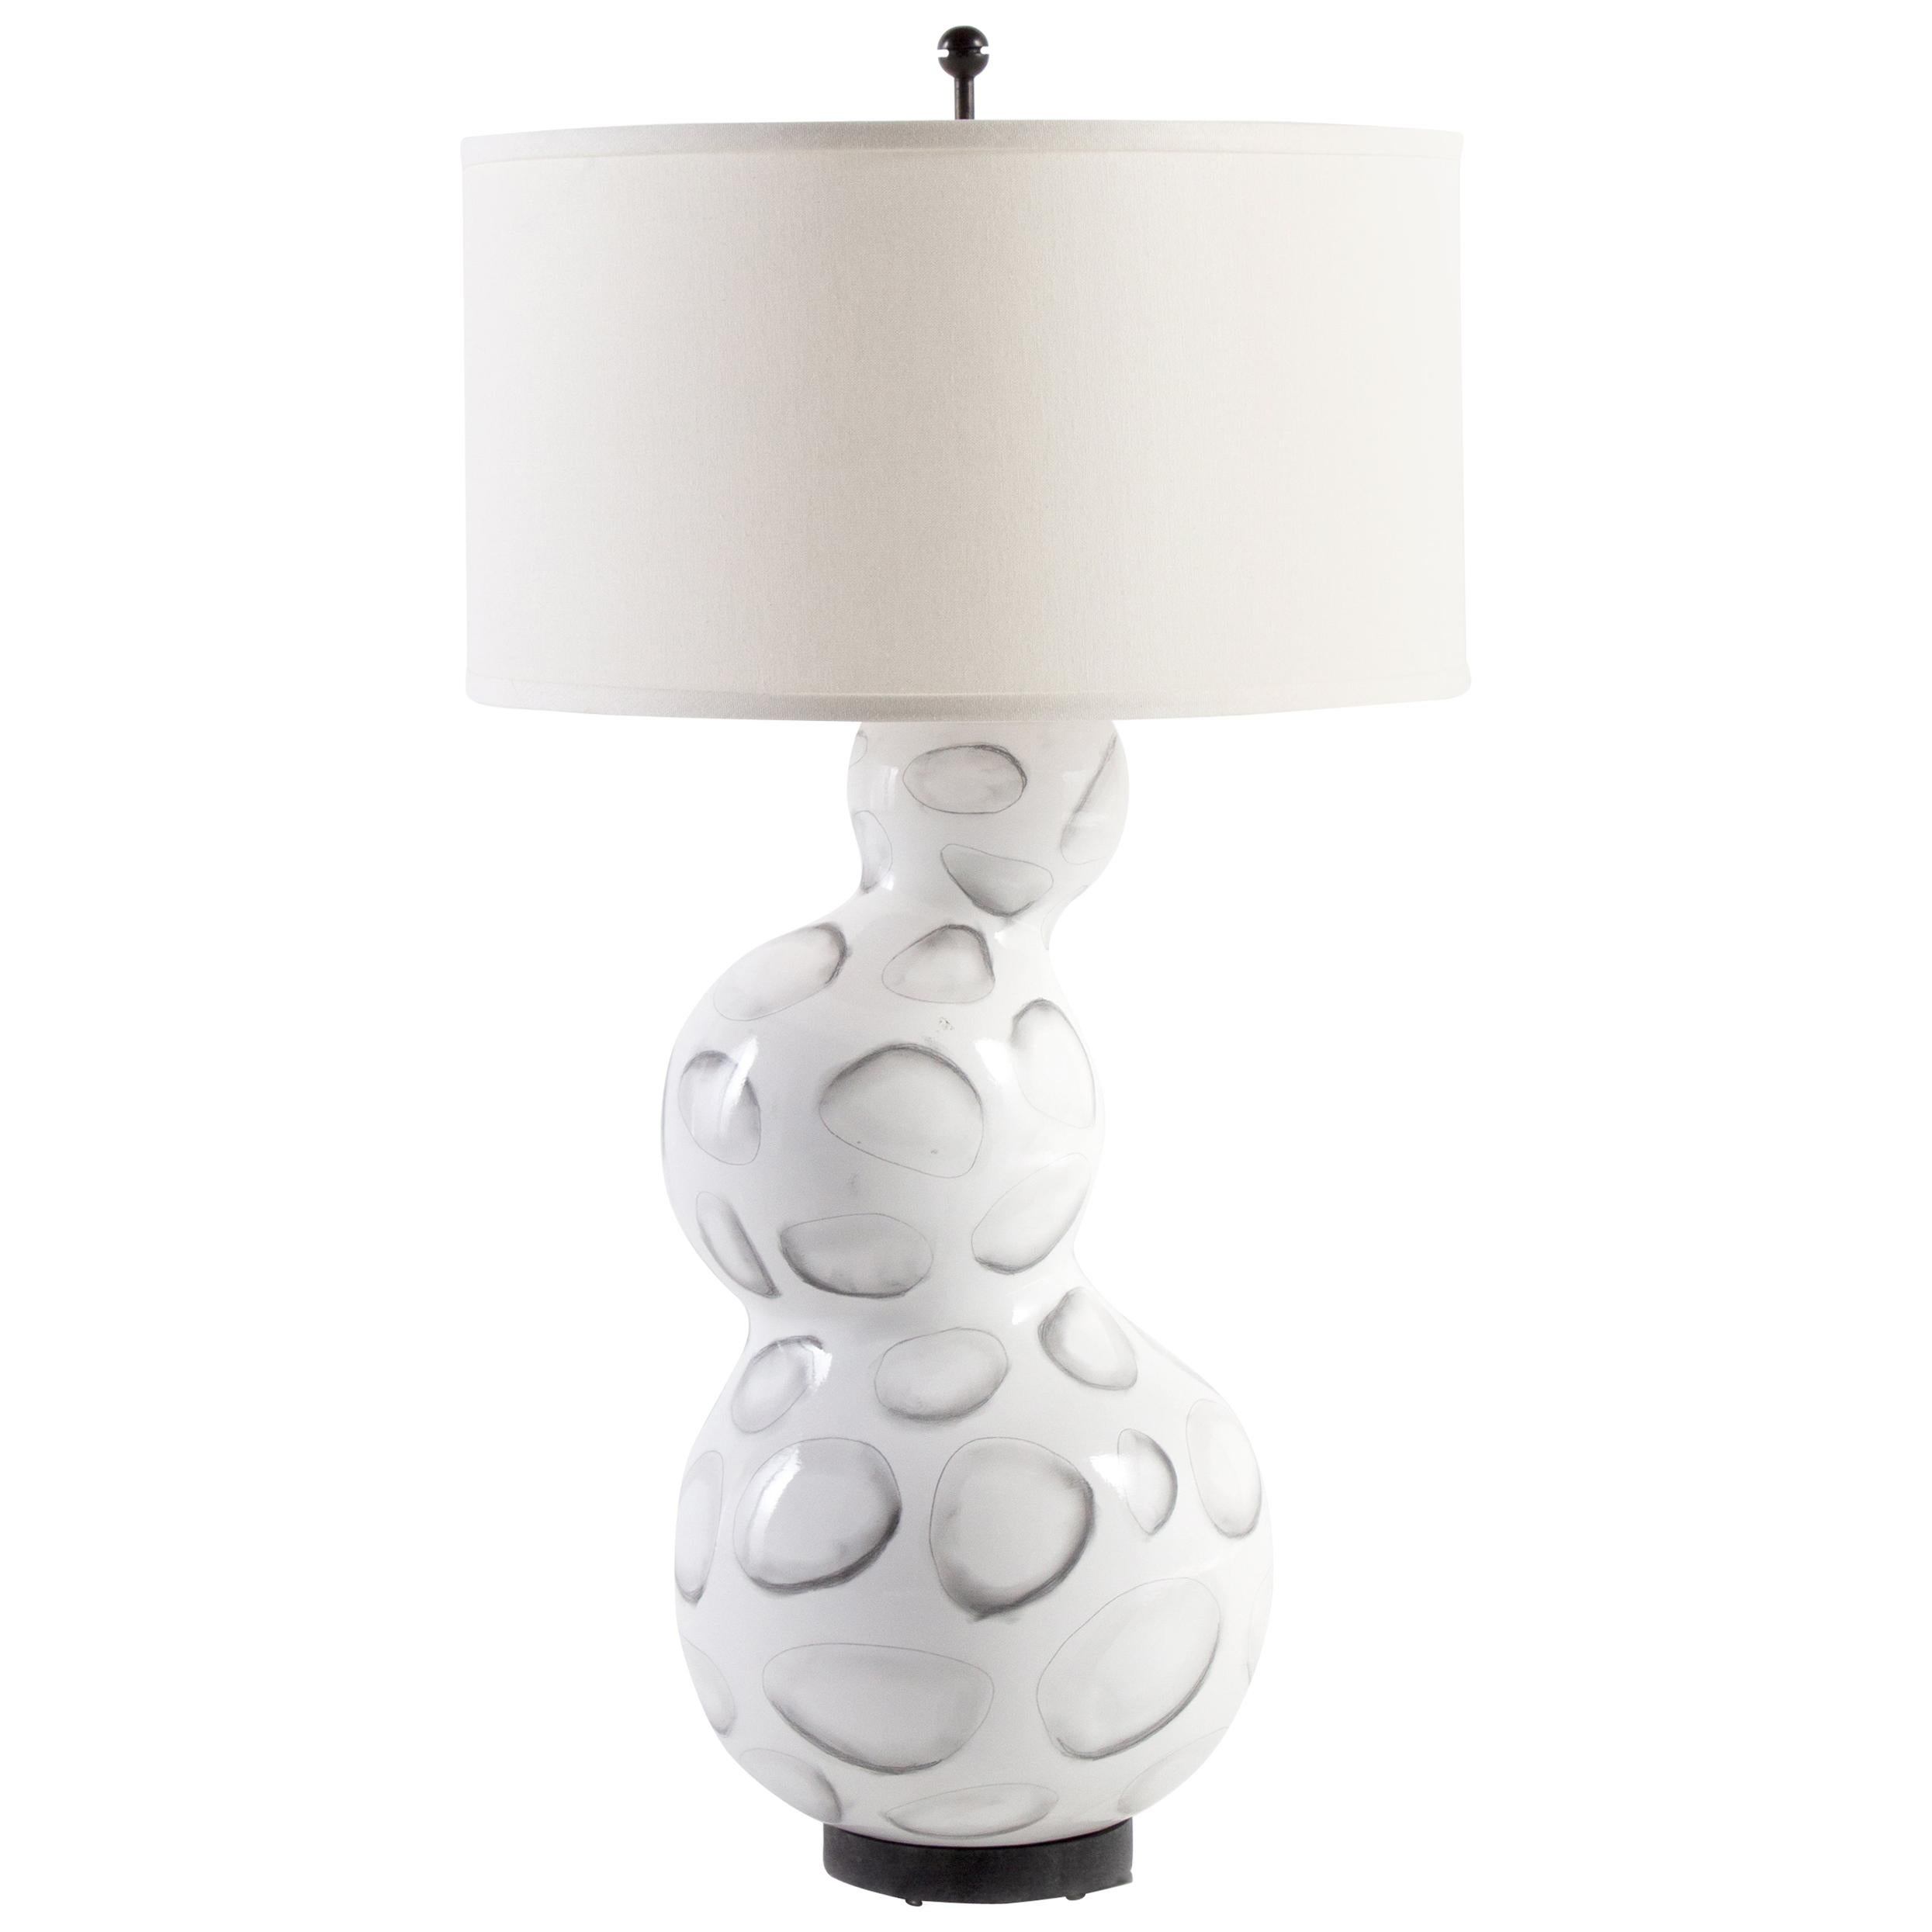 RENG, Sheru, Gloss White Glazed Ceramic with Stylized Shell Design Lamp For Sale